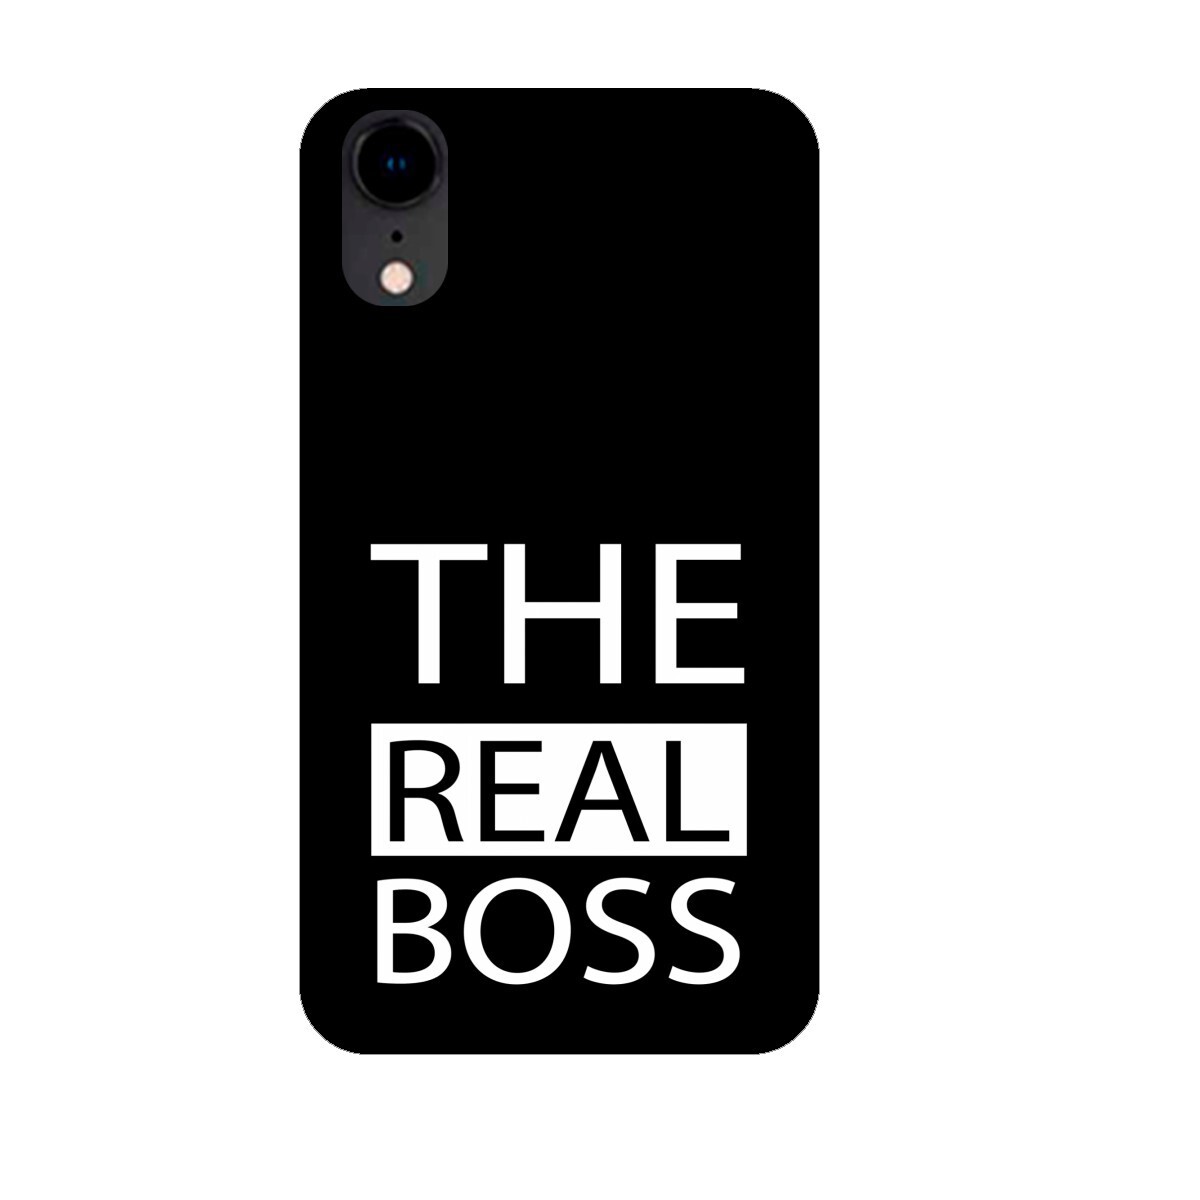 Real boss